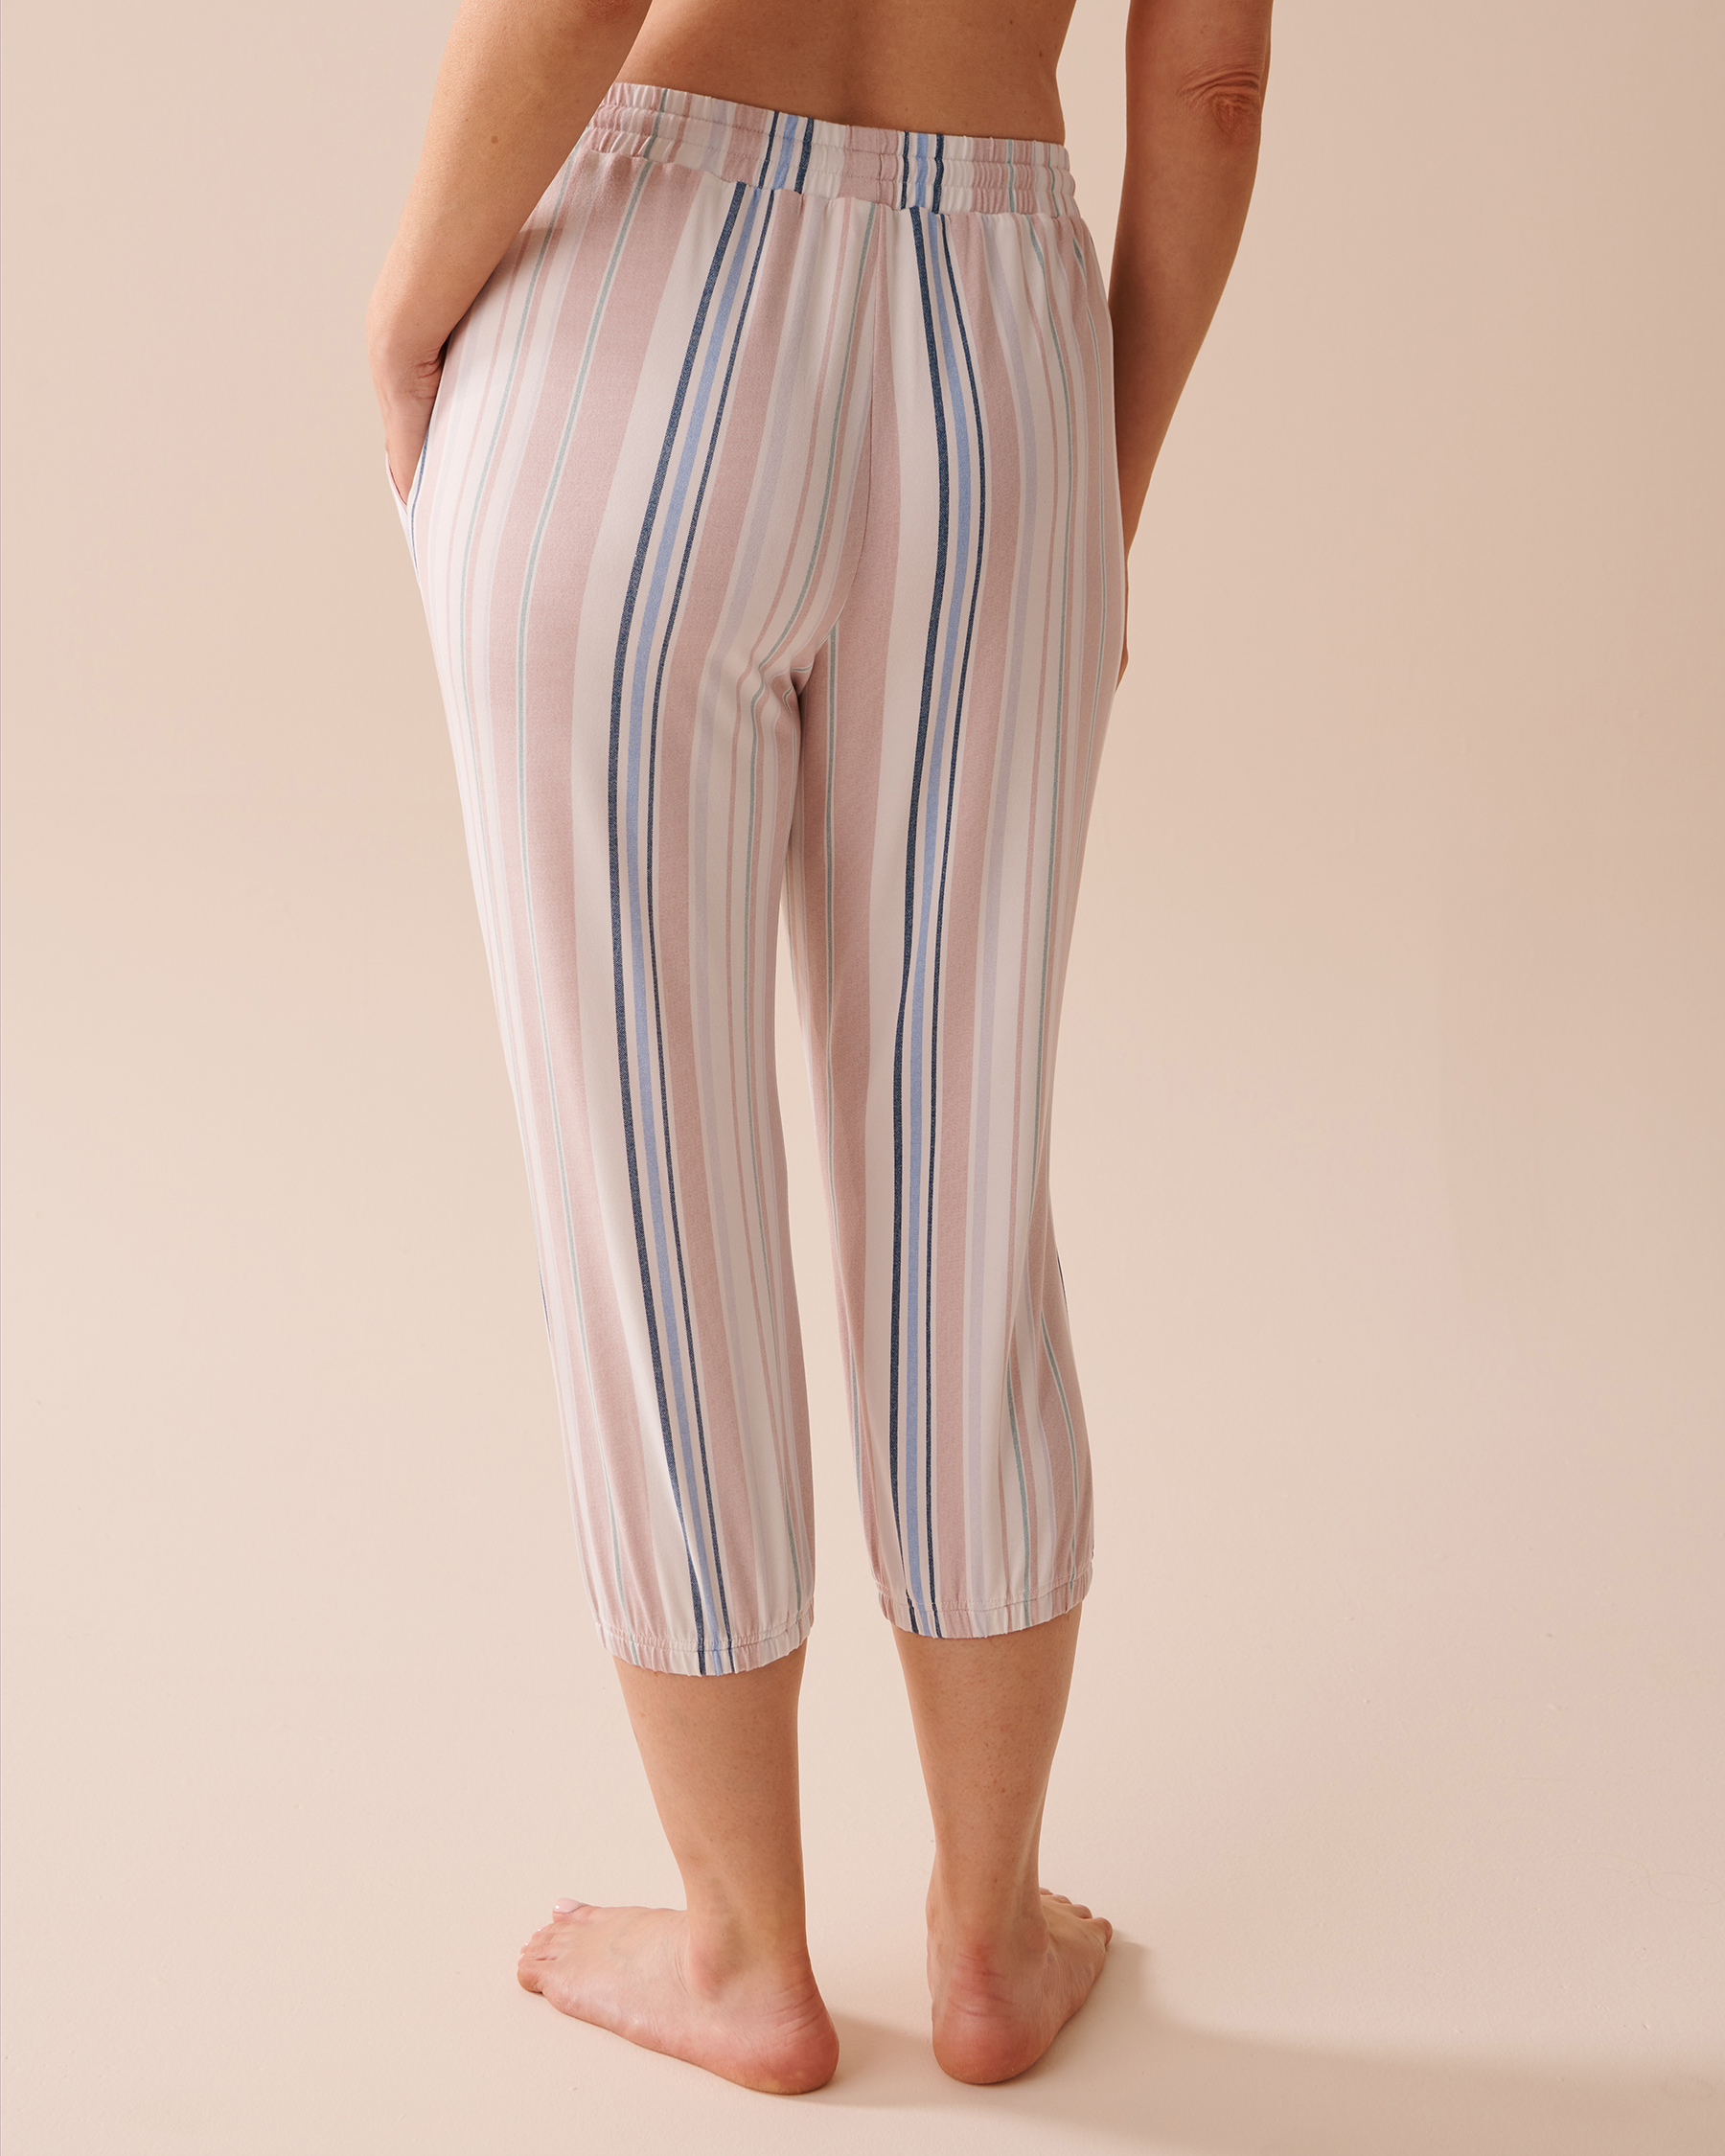 Women's pajama bottoms